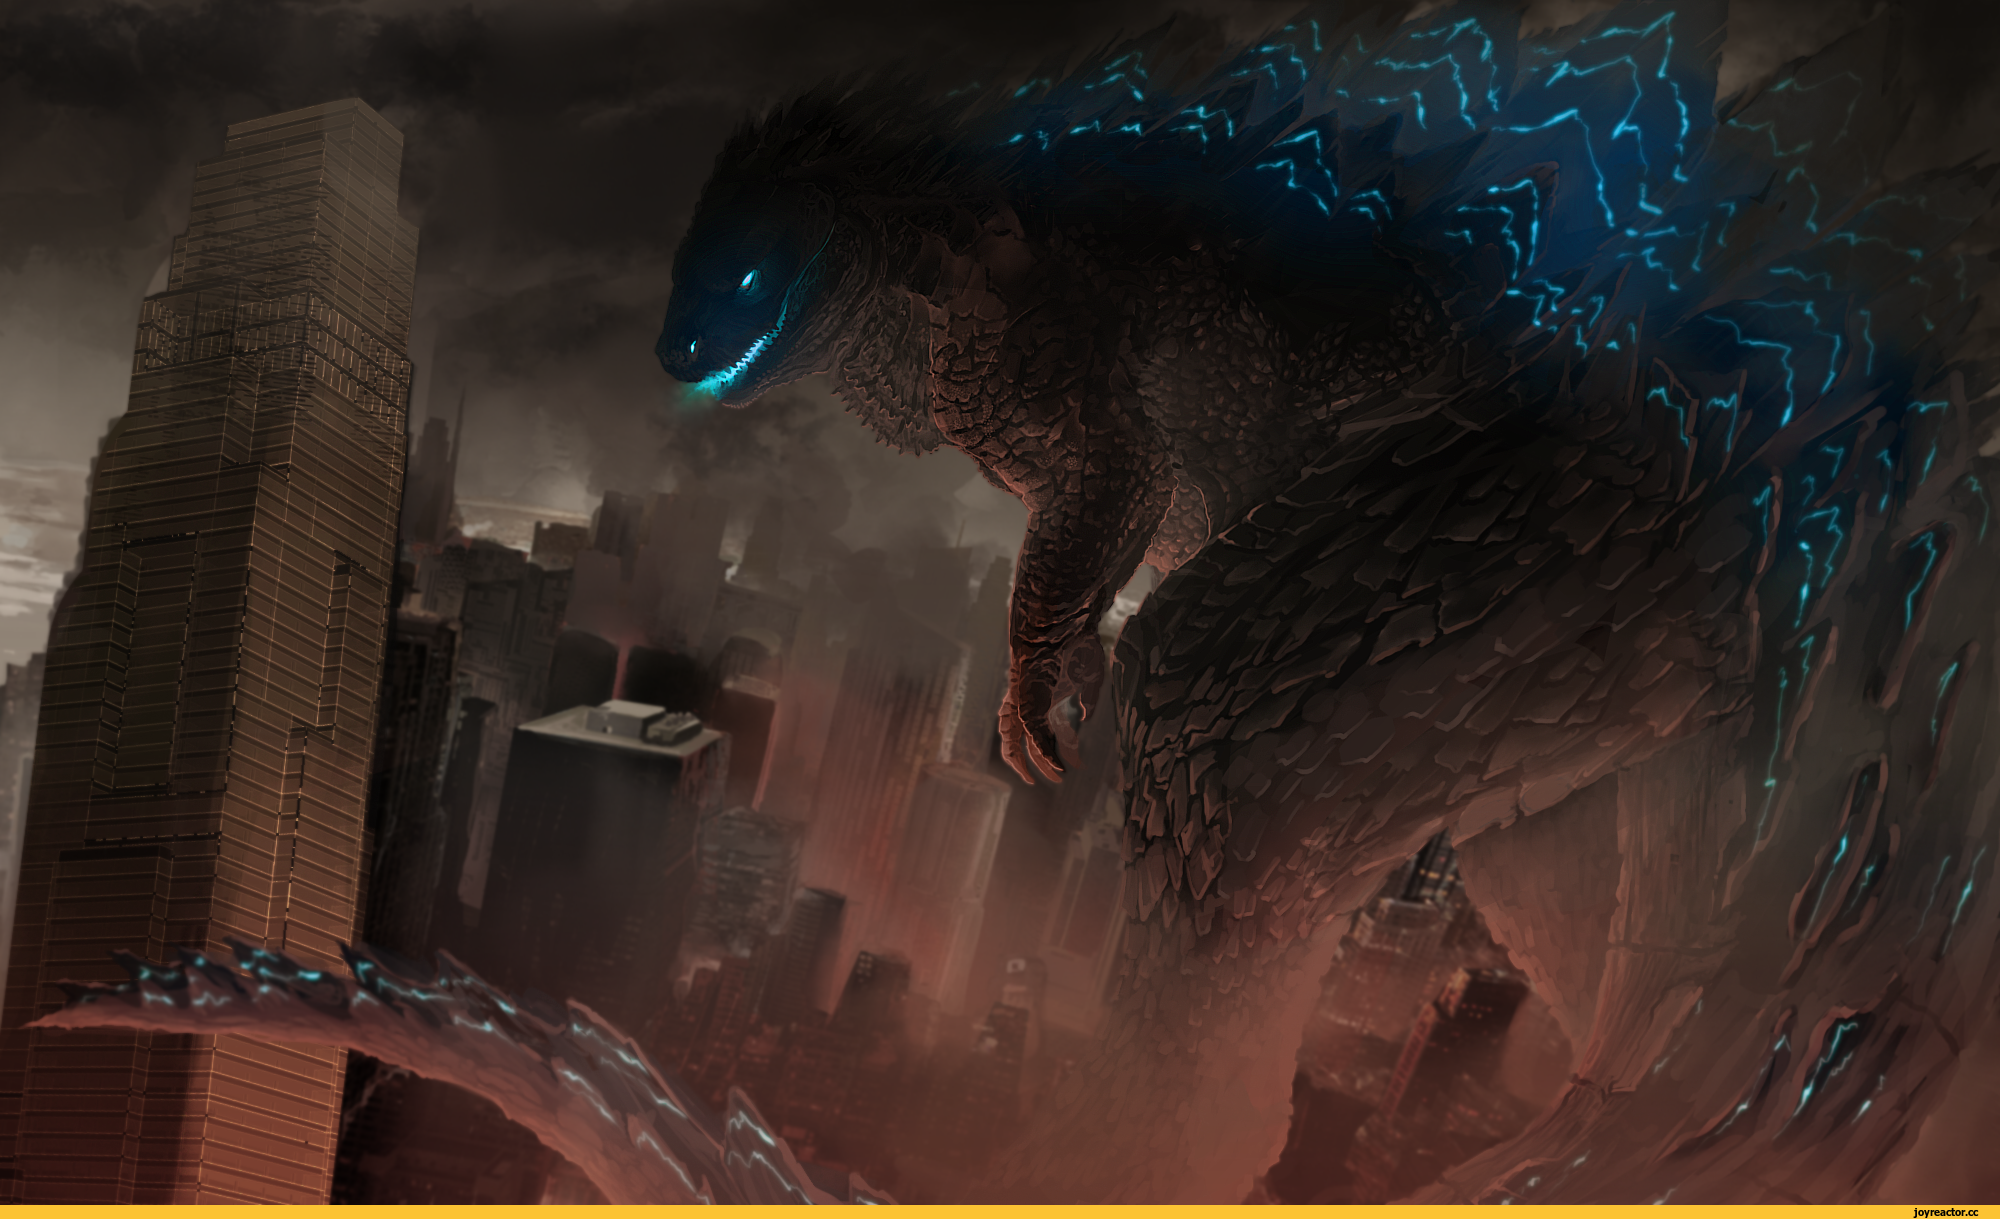 Godzilla evolved. Годзилла 2014. Кайдзю Годзилла 2014. Годзилла Godzilla, 2014.